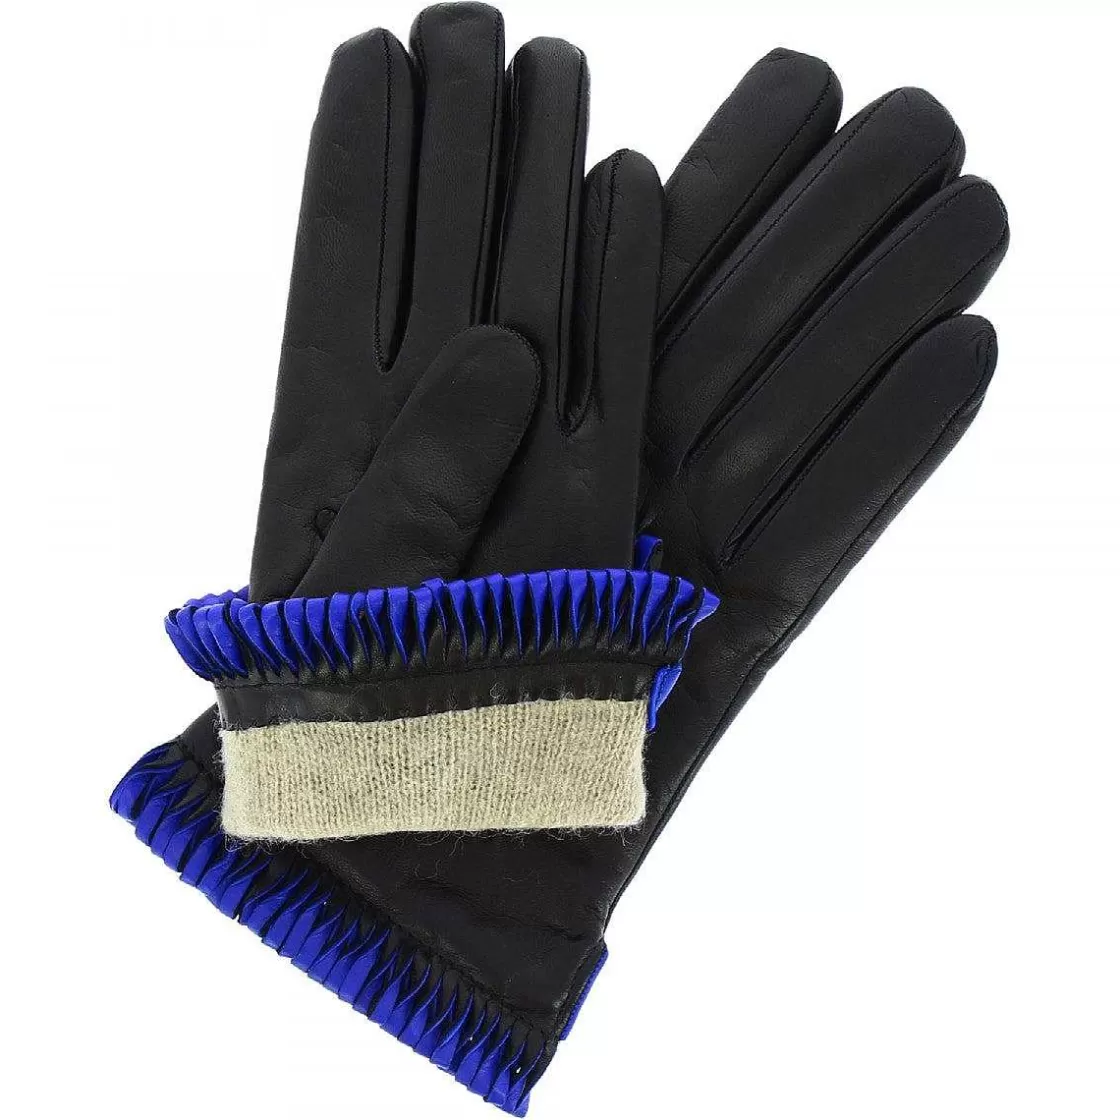 Leonardo Handmade Women'S Gloves In Black Nappa Leather With Blue Border Hot